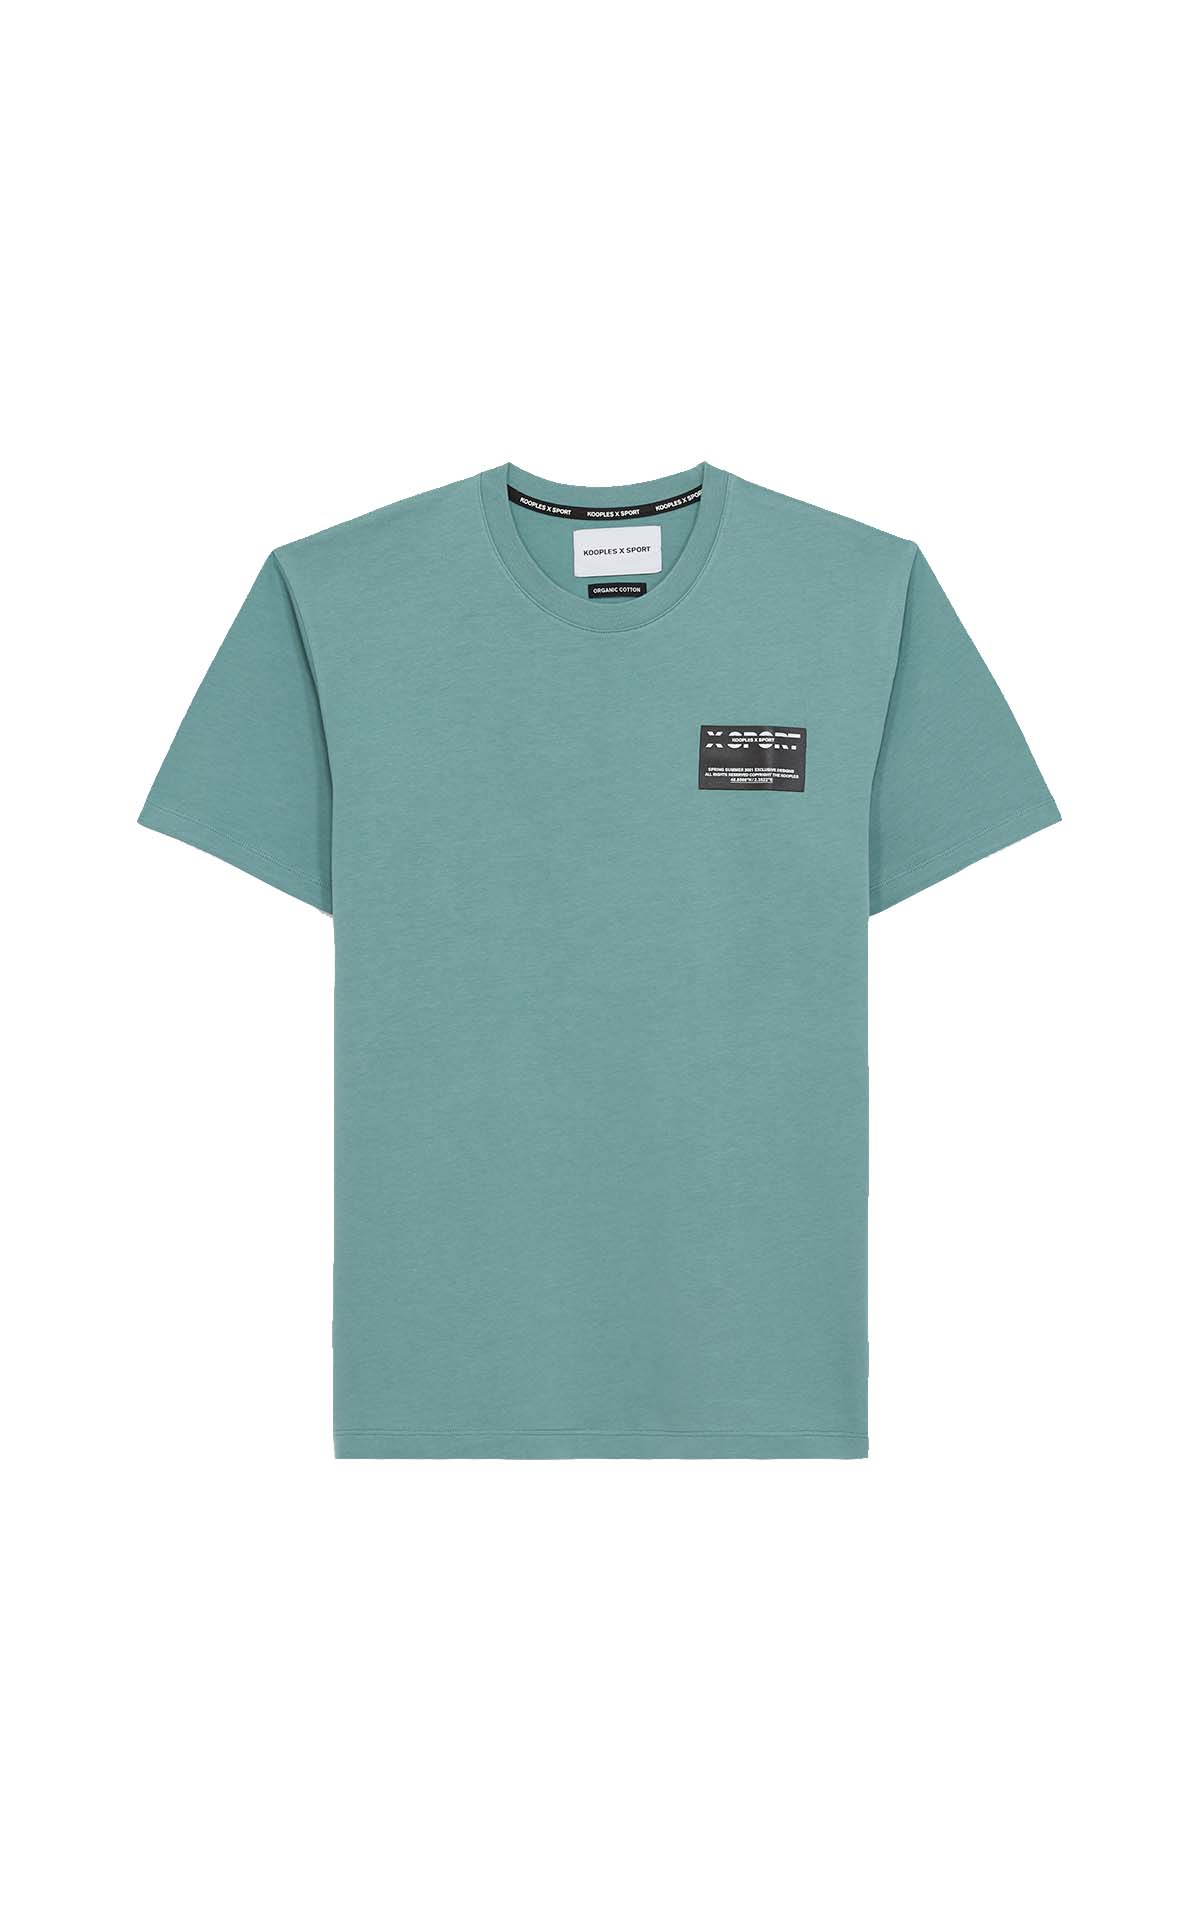 Turquoise T-shirt